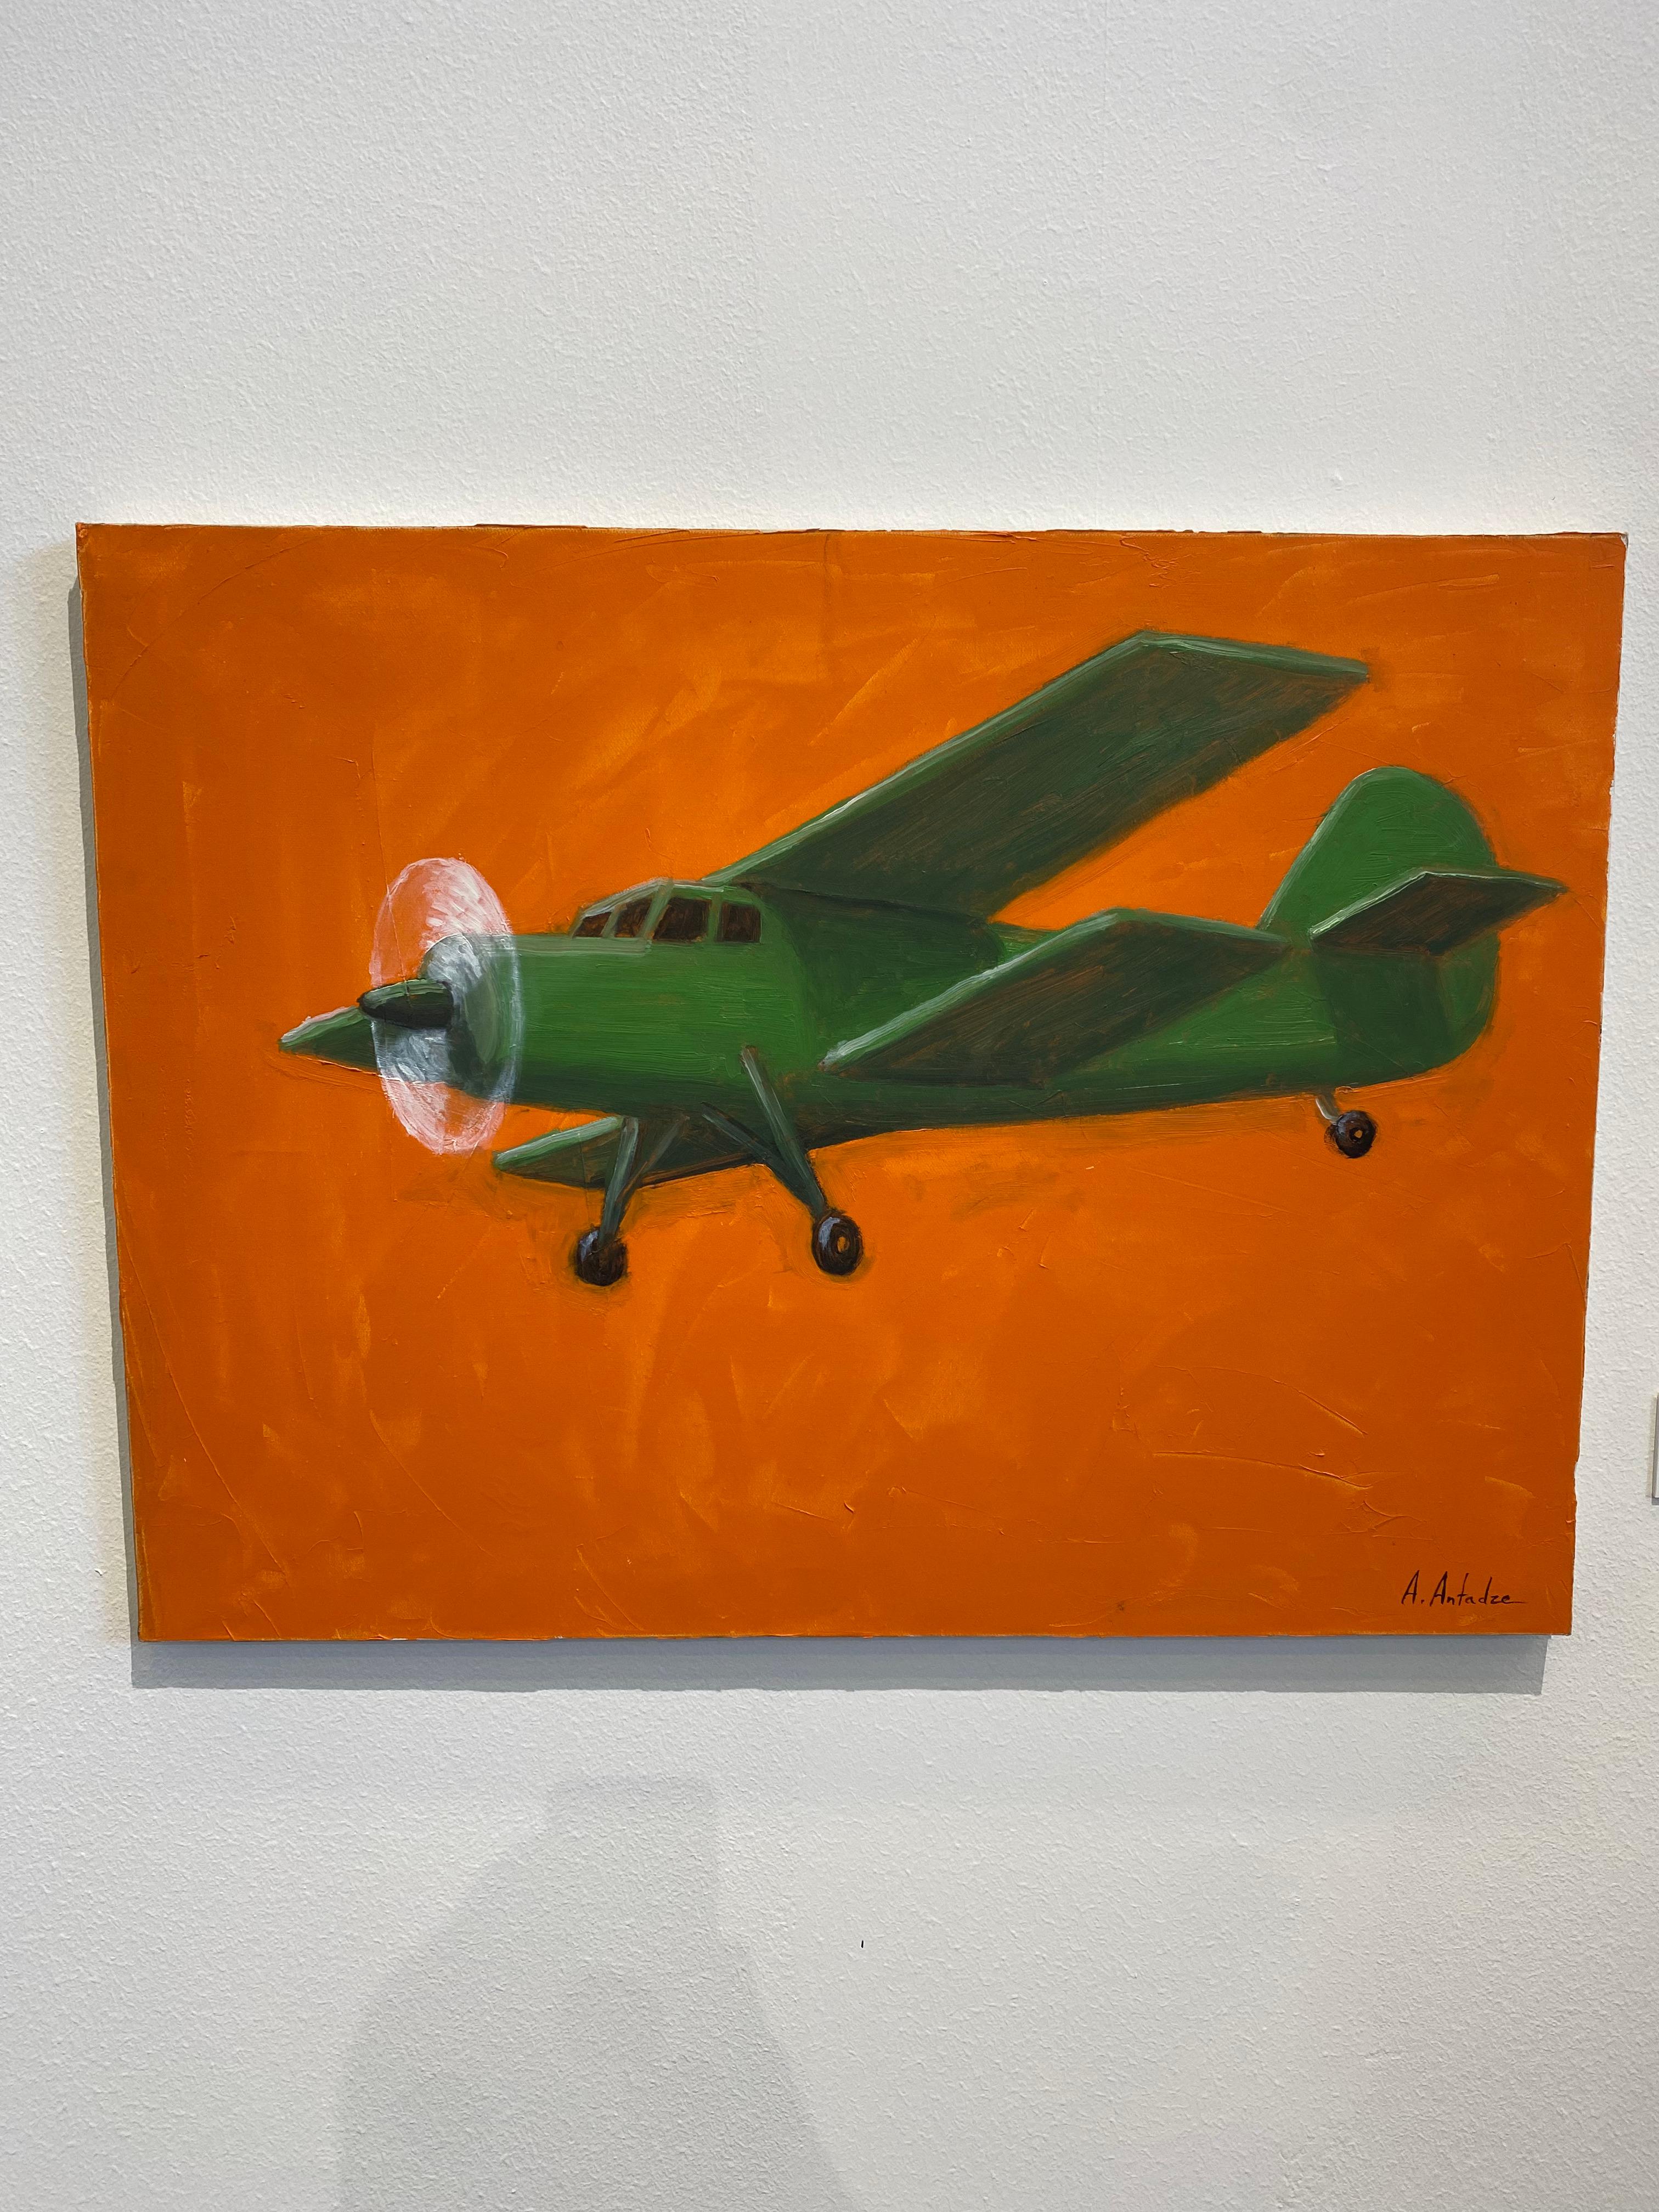 Georgian Contemporary Art by Alexander Sandro Antadze - Green Plane For Sale 7